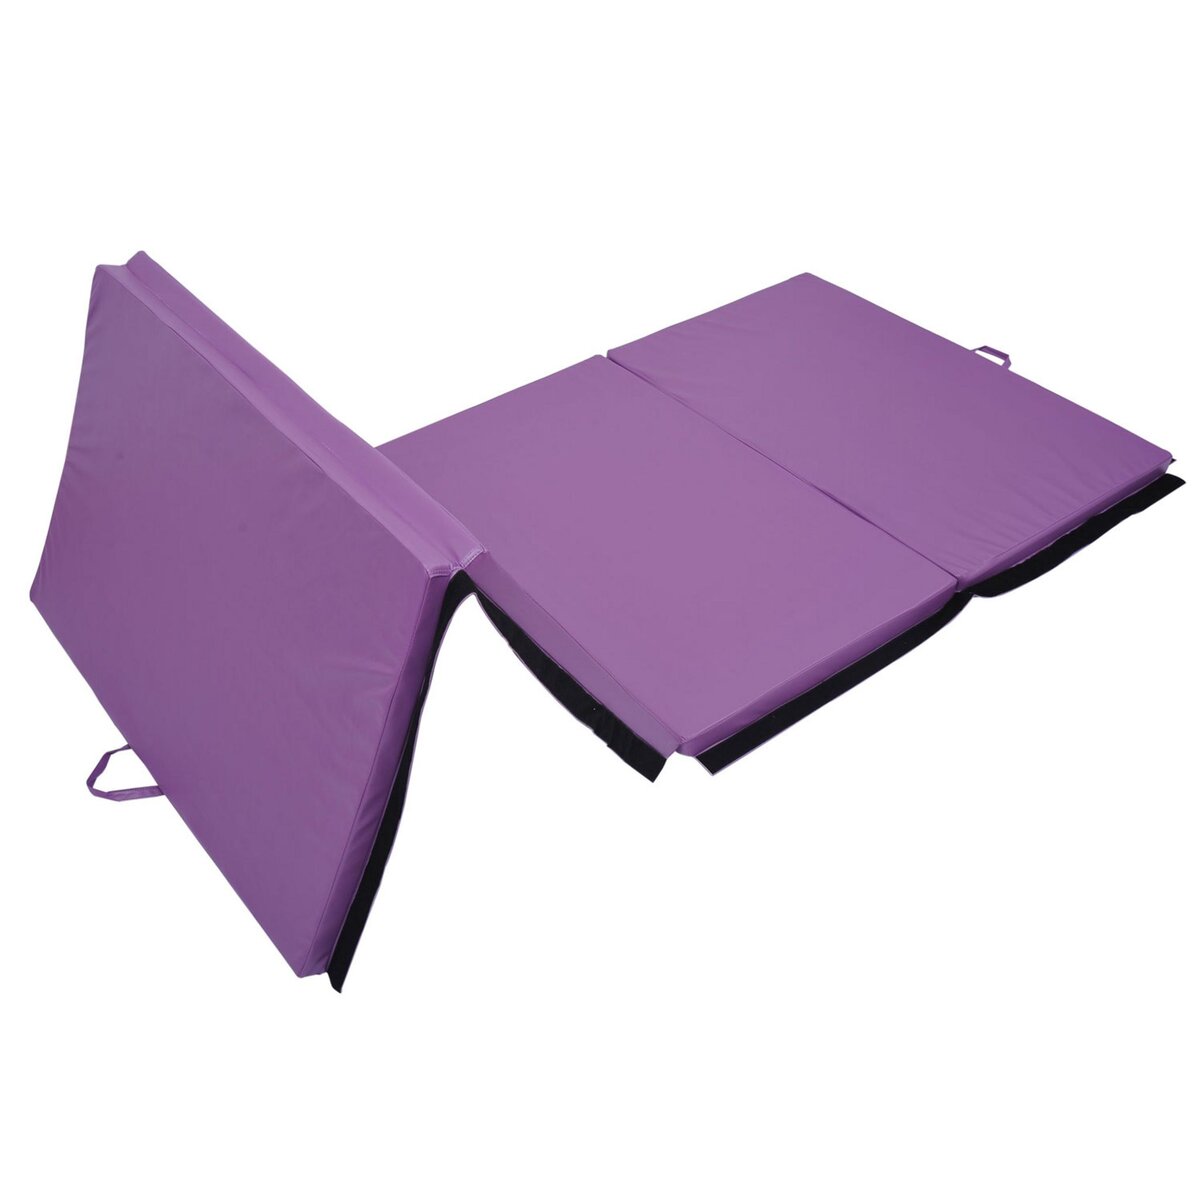 HOMCOM Tapis de sol gymnastique Fitness pliable portable